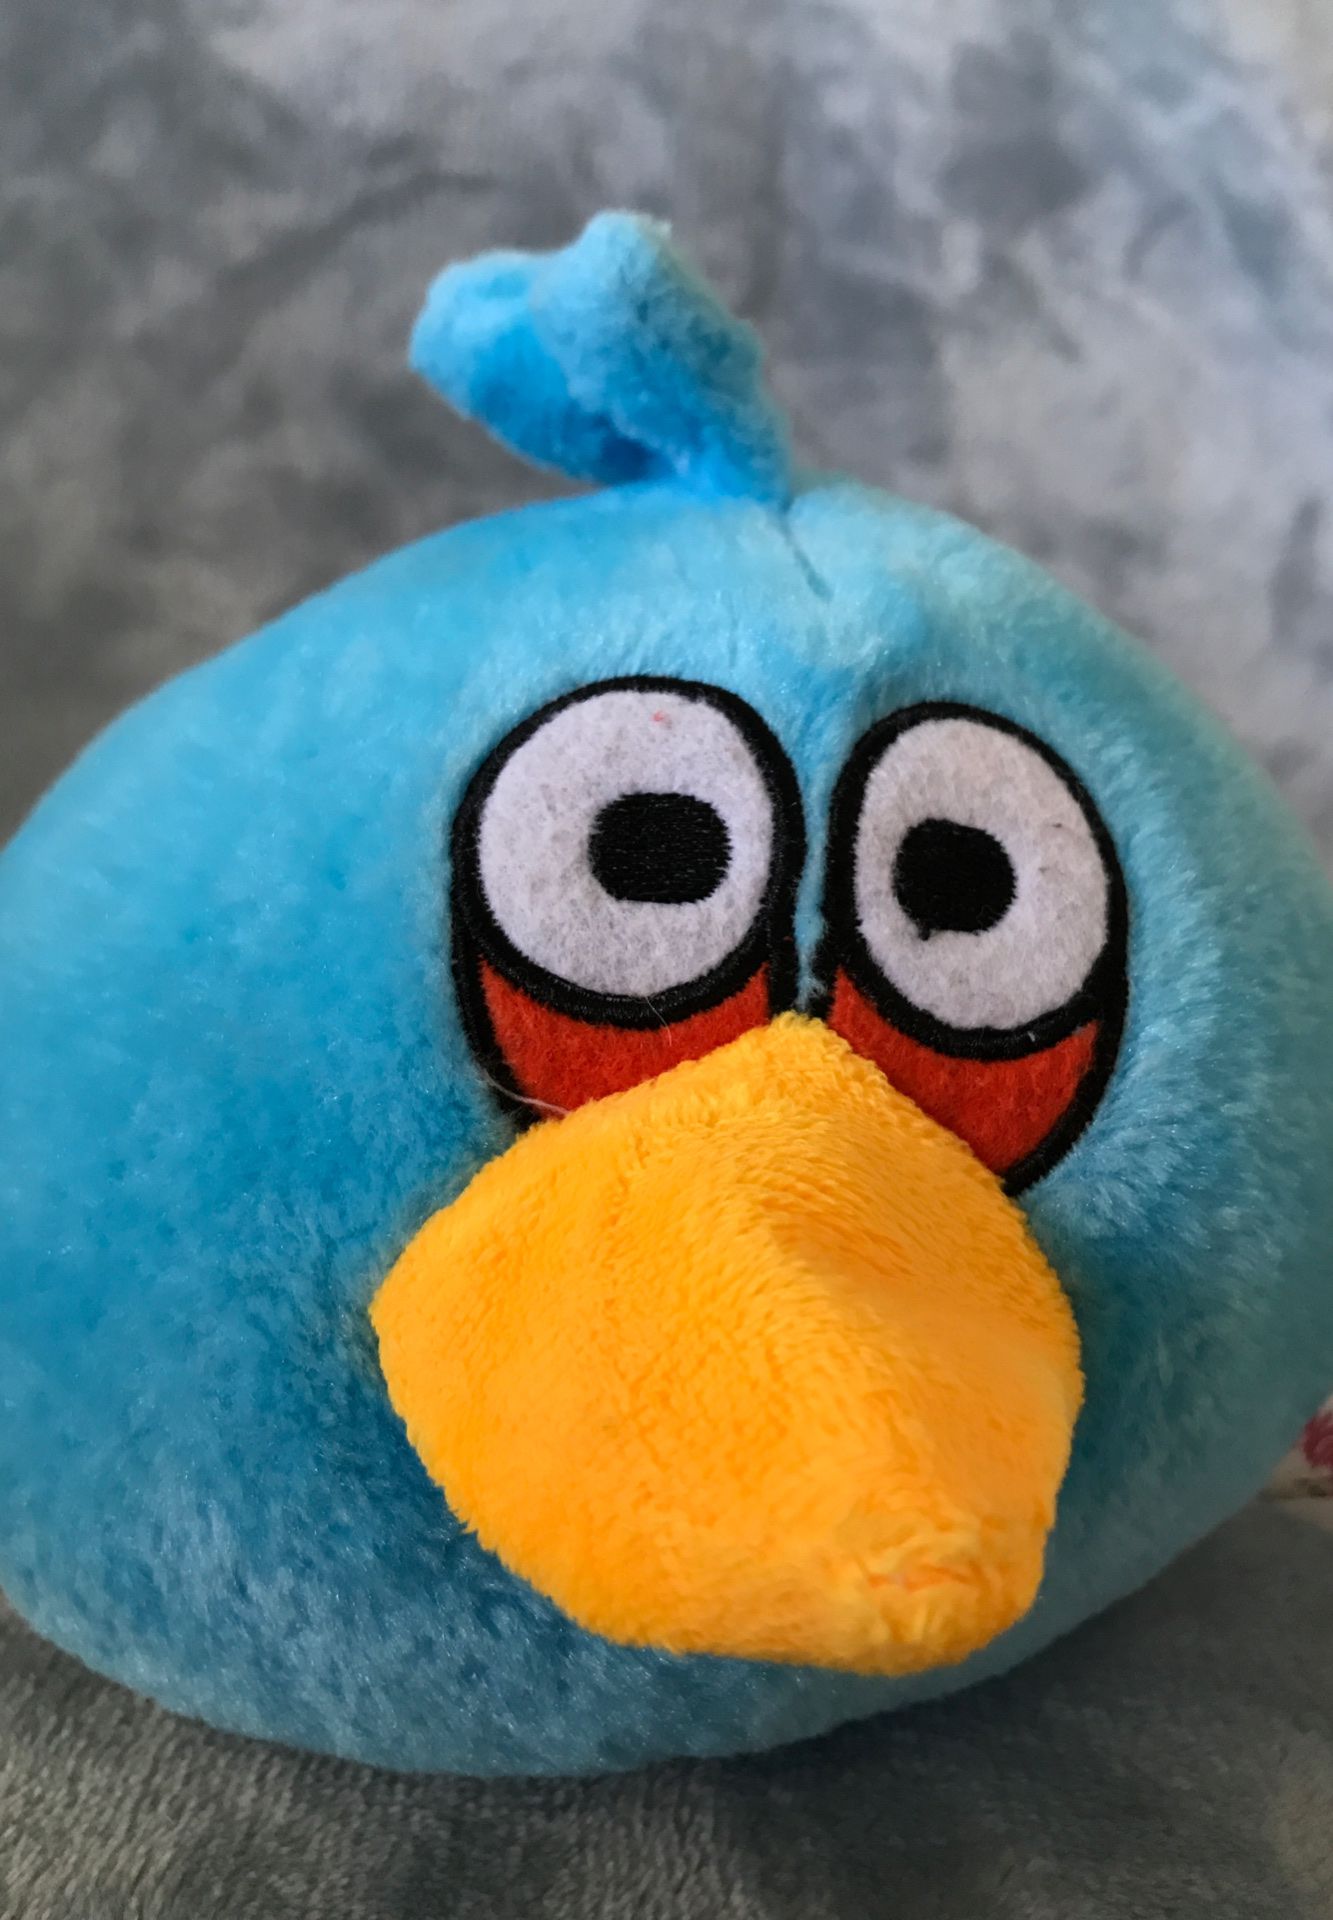 6” Angry Birds stuffed animal